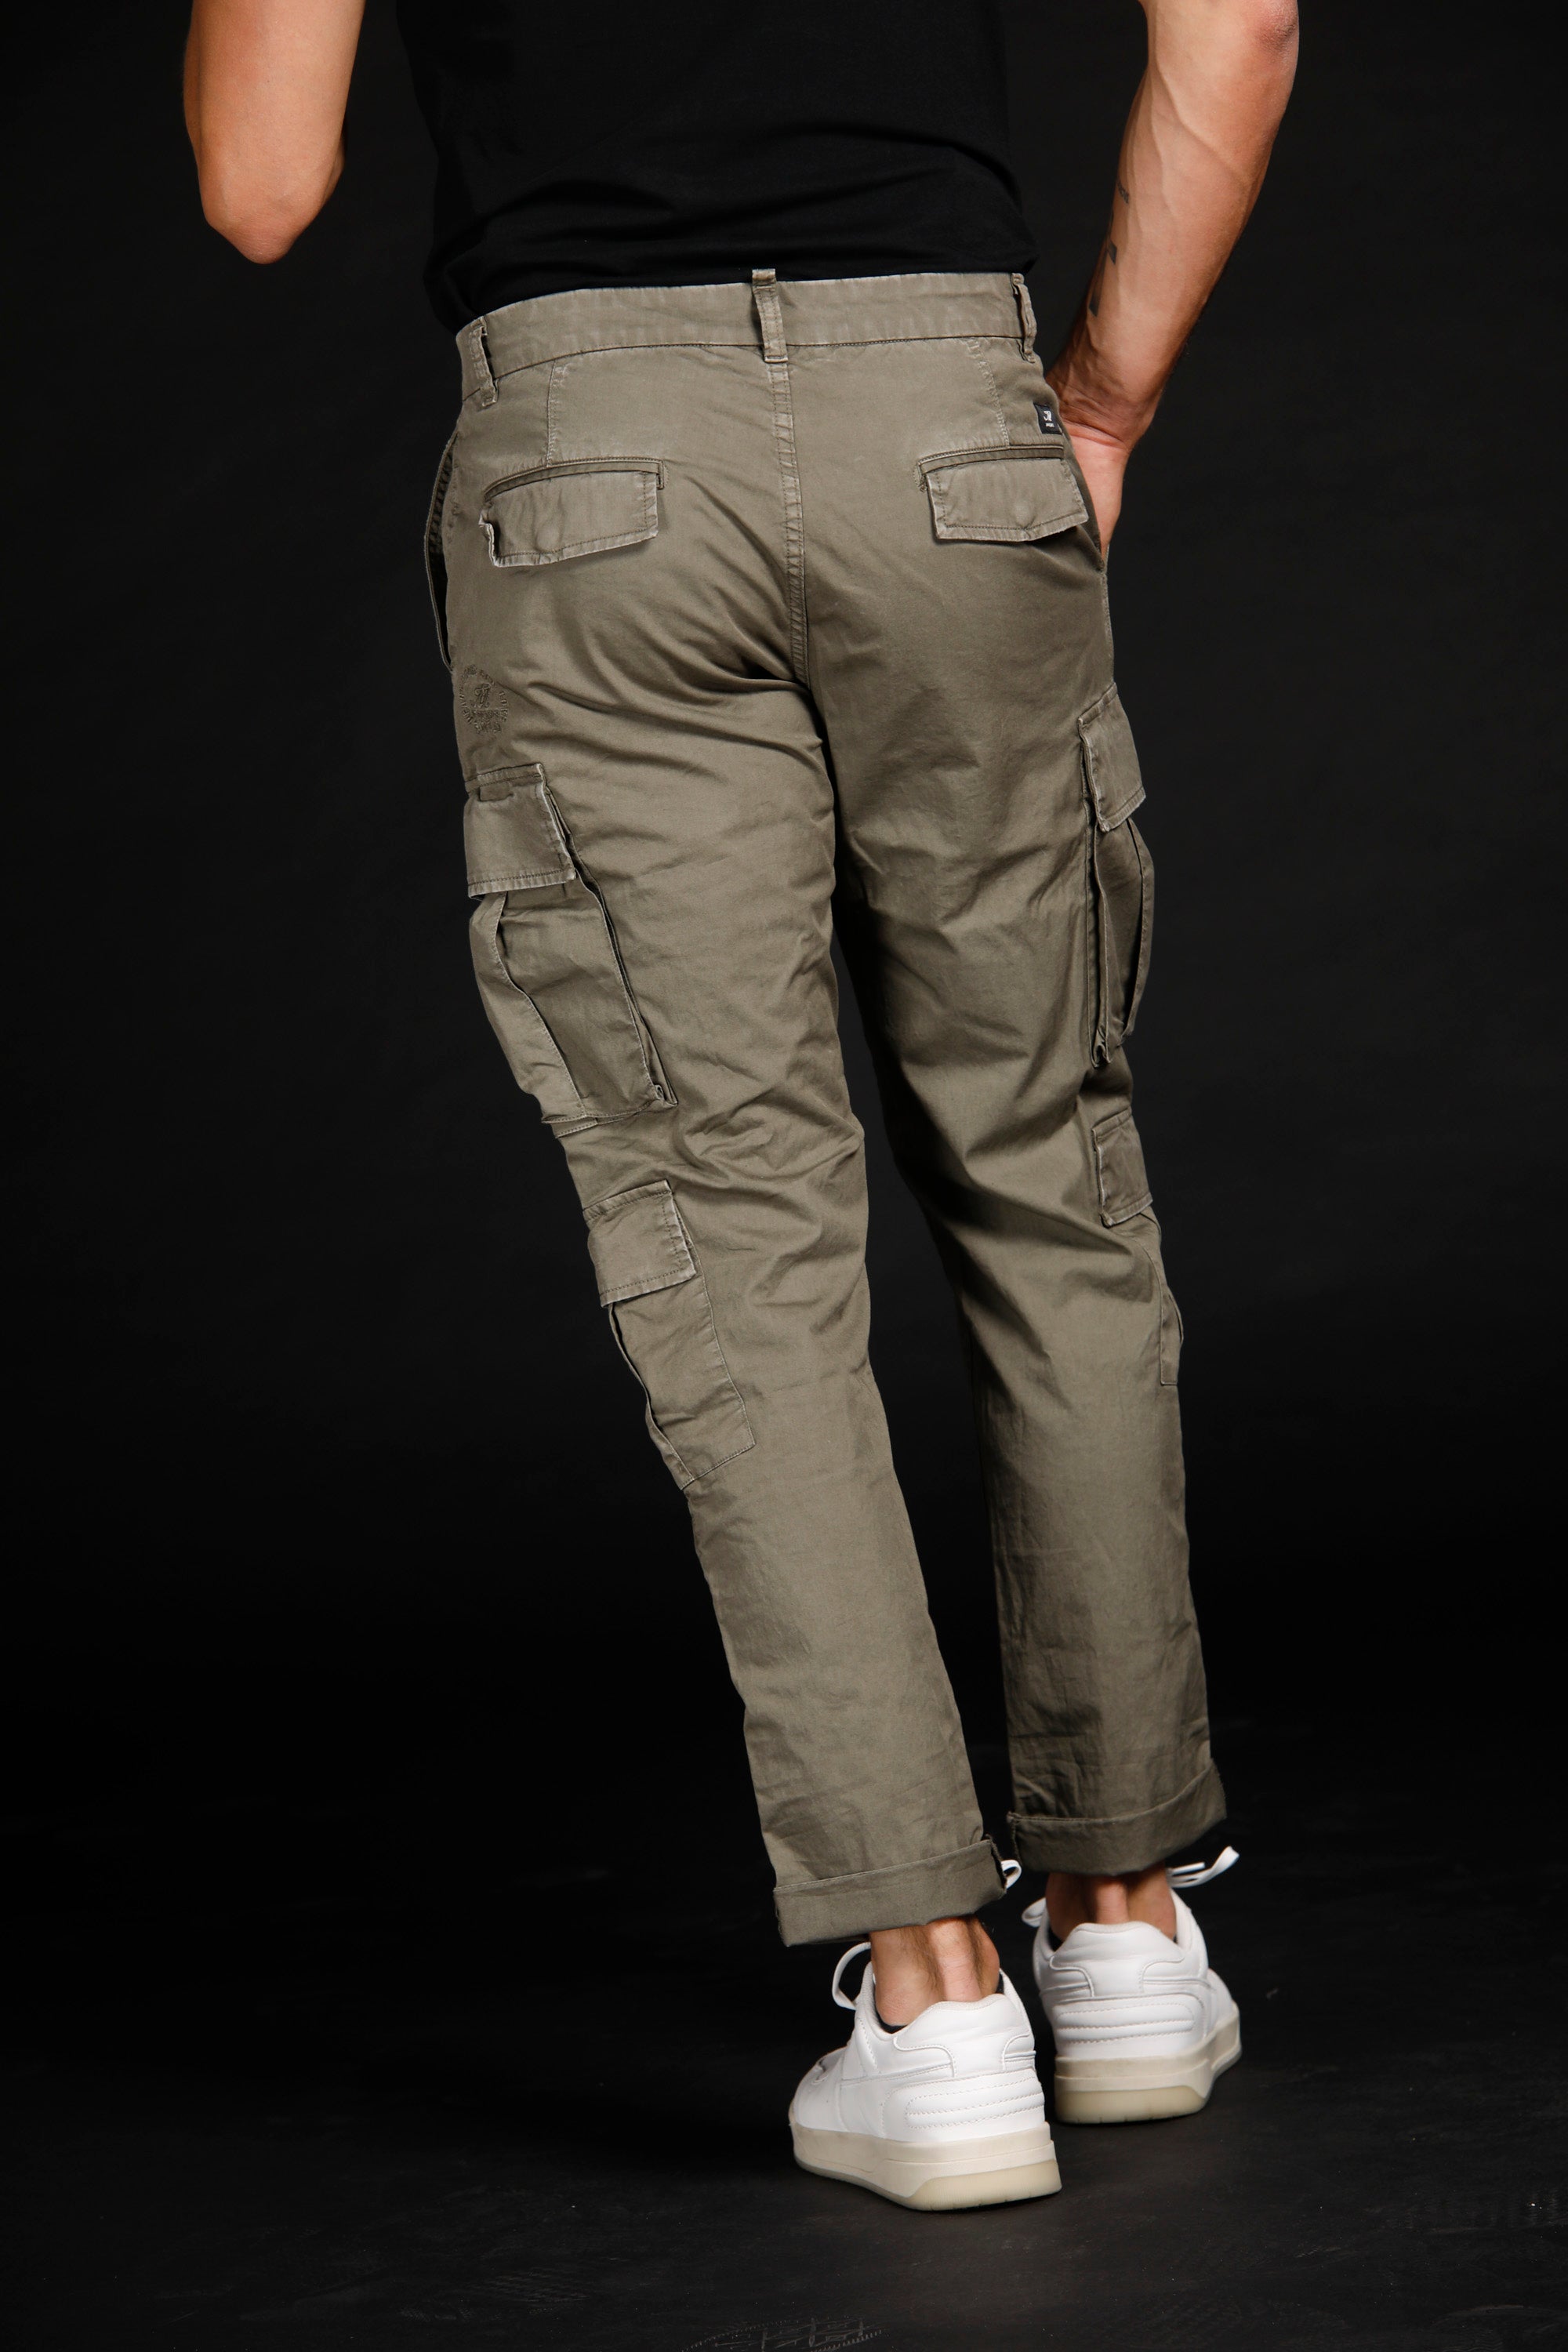 Bahamas pantalon cargo homme édition limitée en coton stretch regular ①